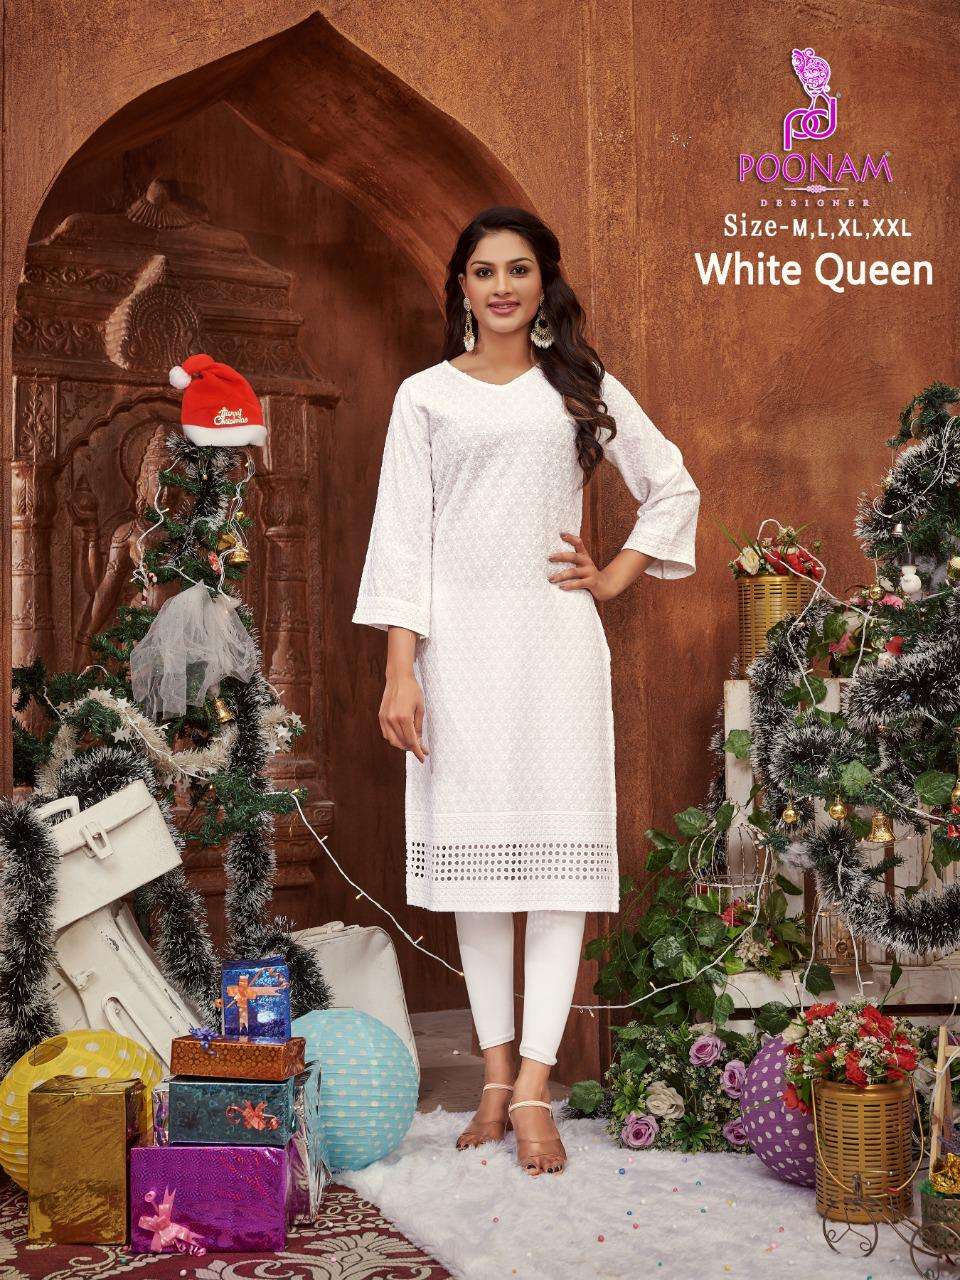 poonam designer white queen 1001-1006 series rayon chickan work kurtis collection wholesale price surat